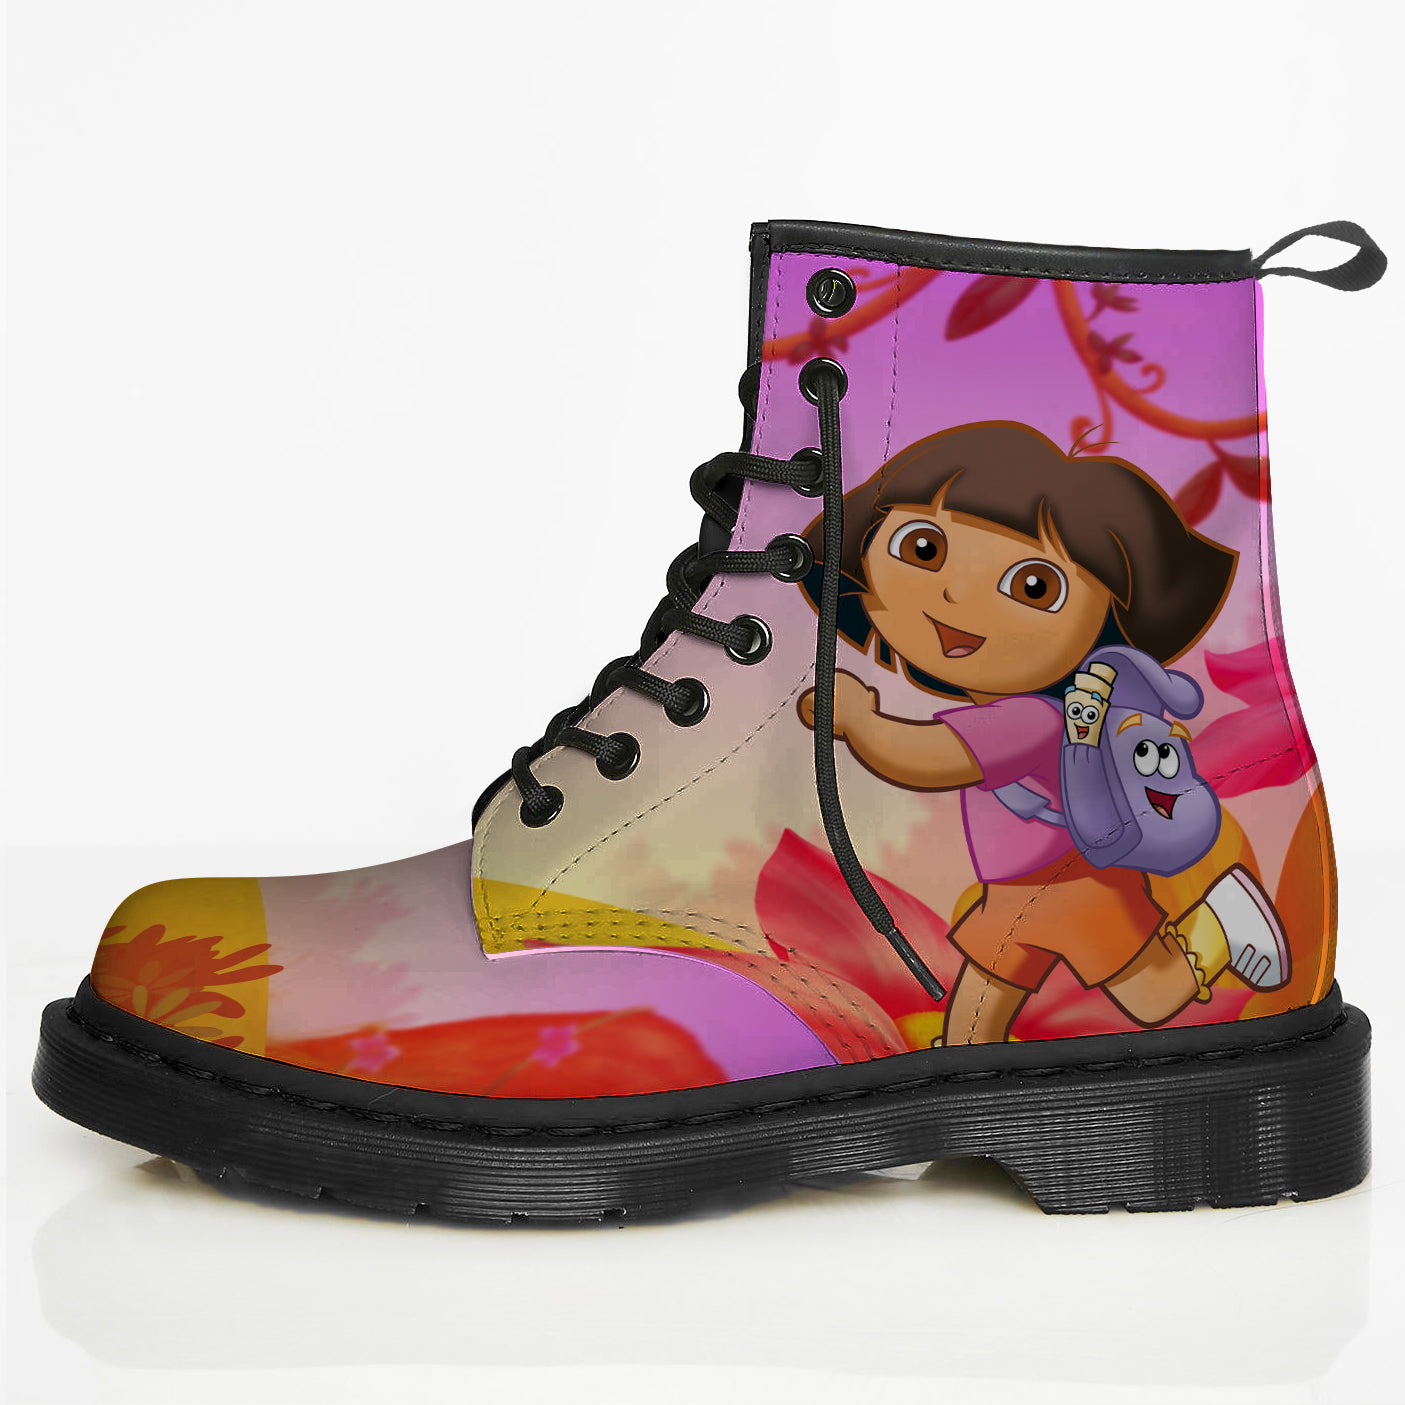 Dora the Explorer Boots